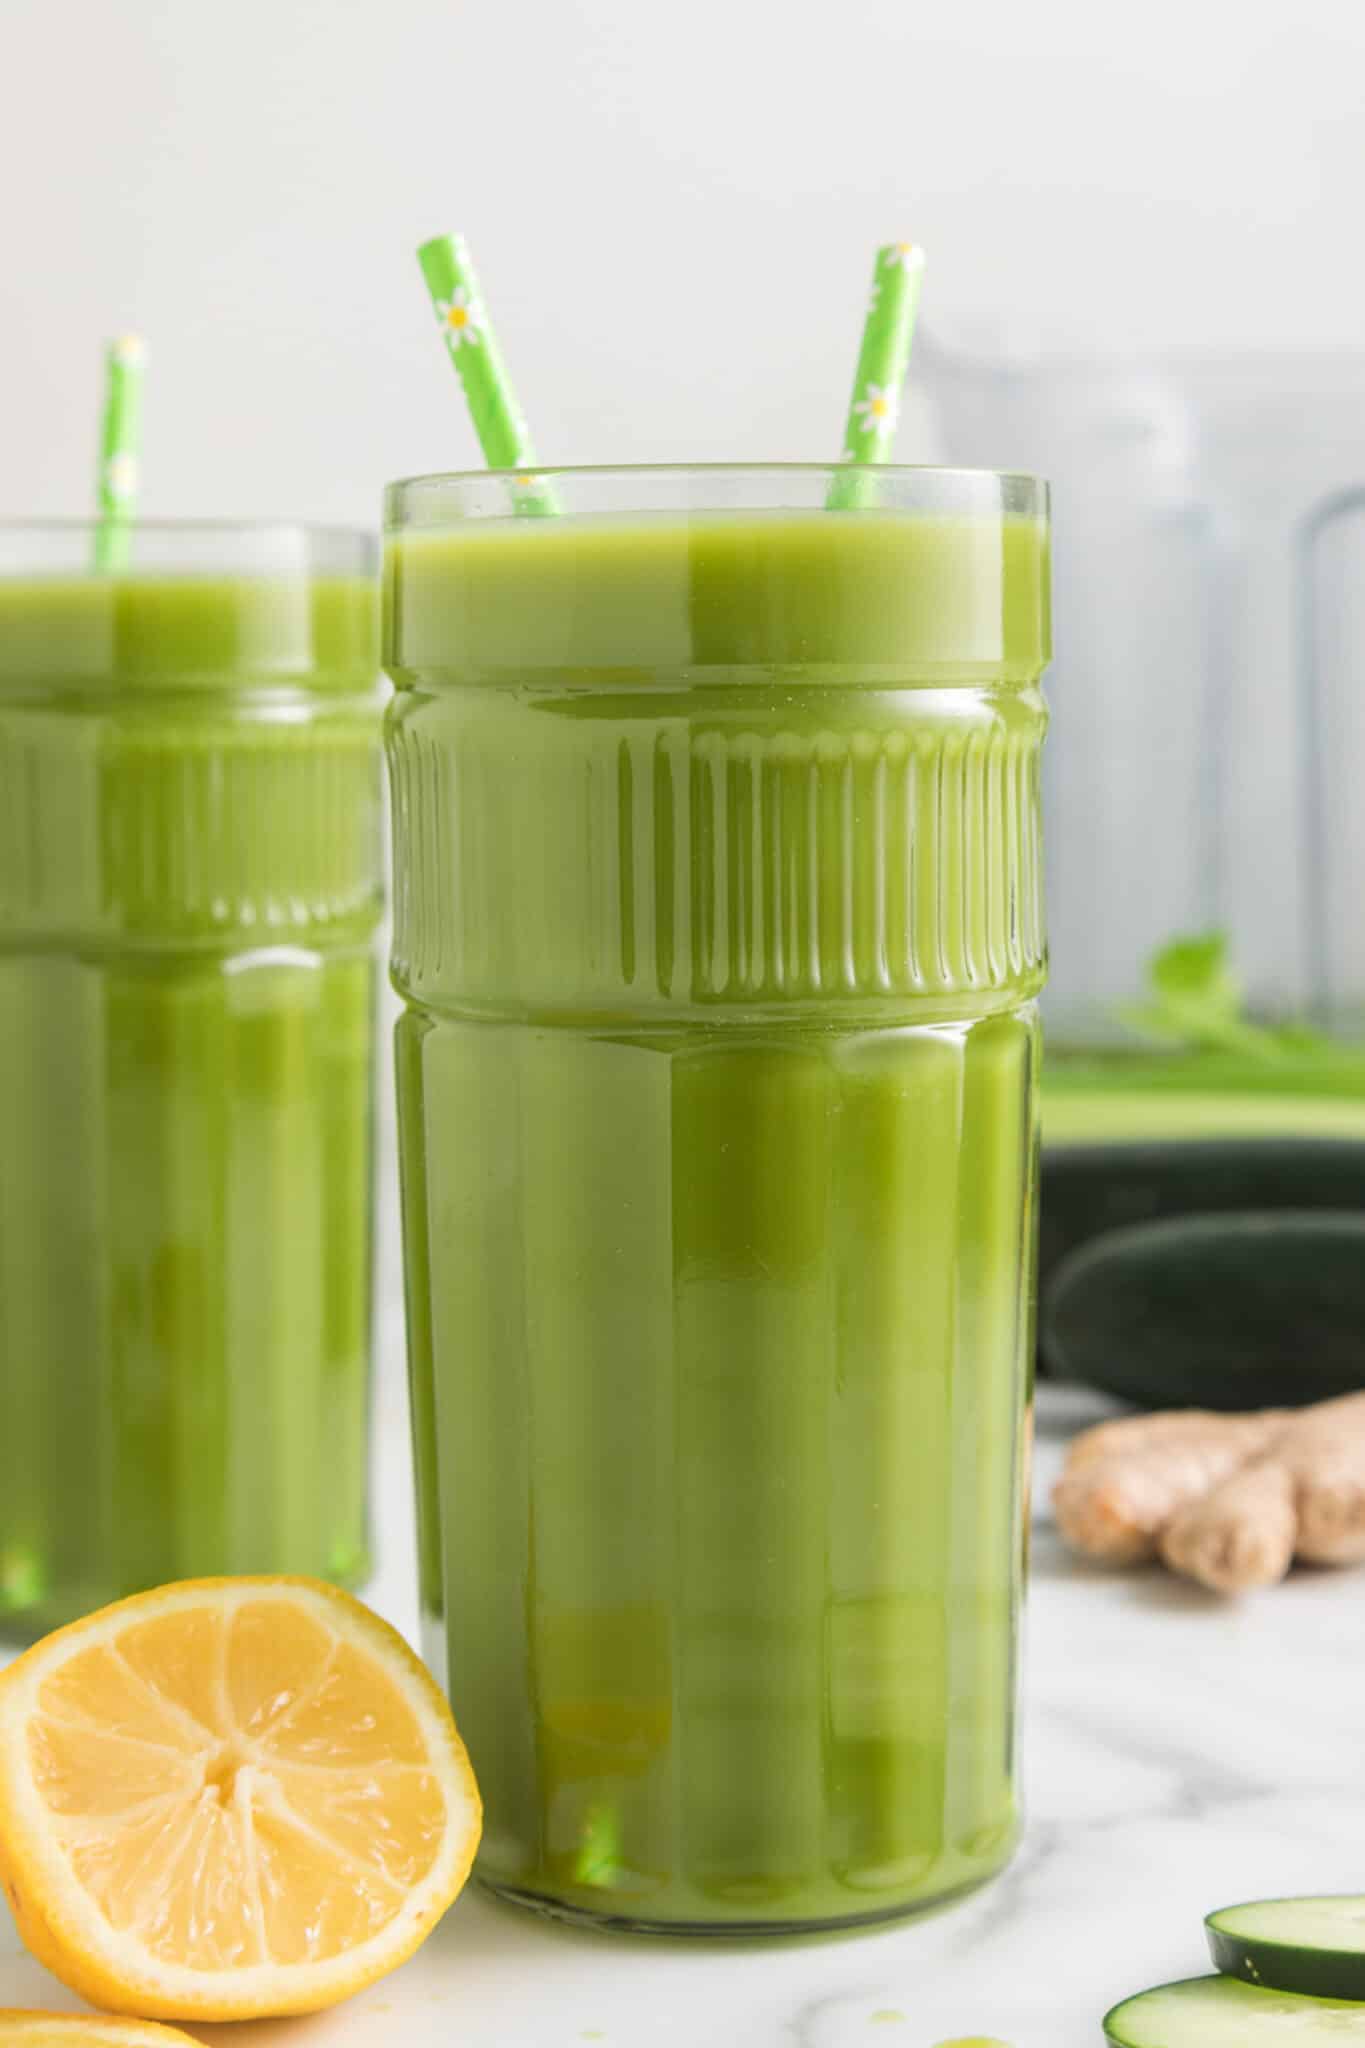 Dos vasos altos de jugo de limón, jengibre y verde, cada uno con dos pajitas.